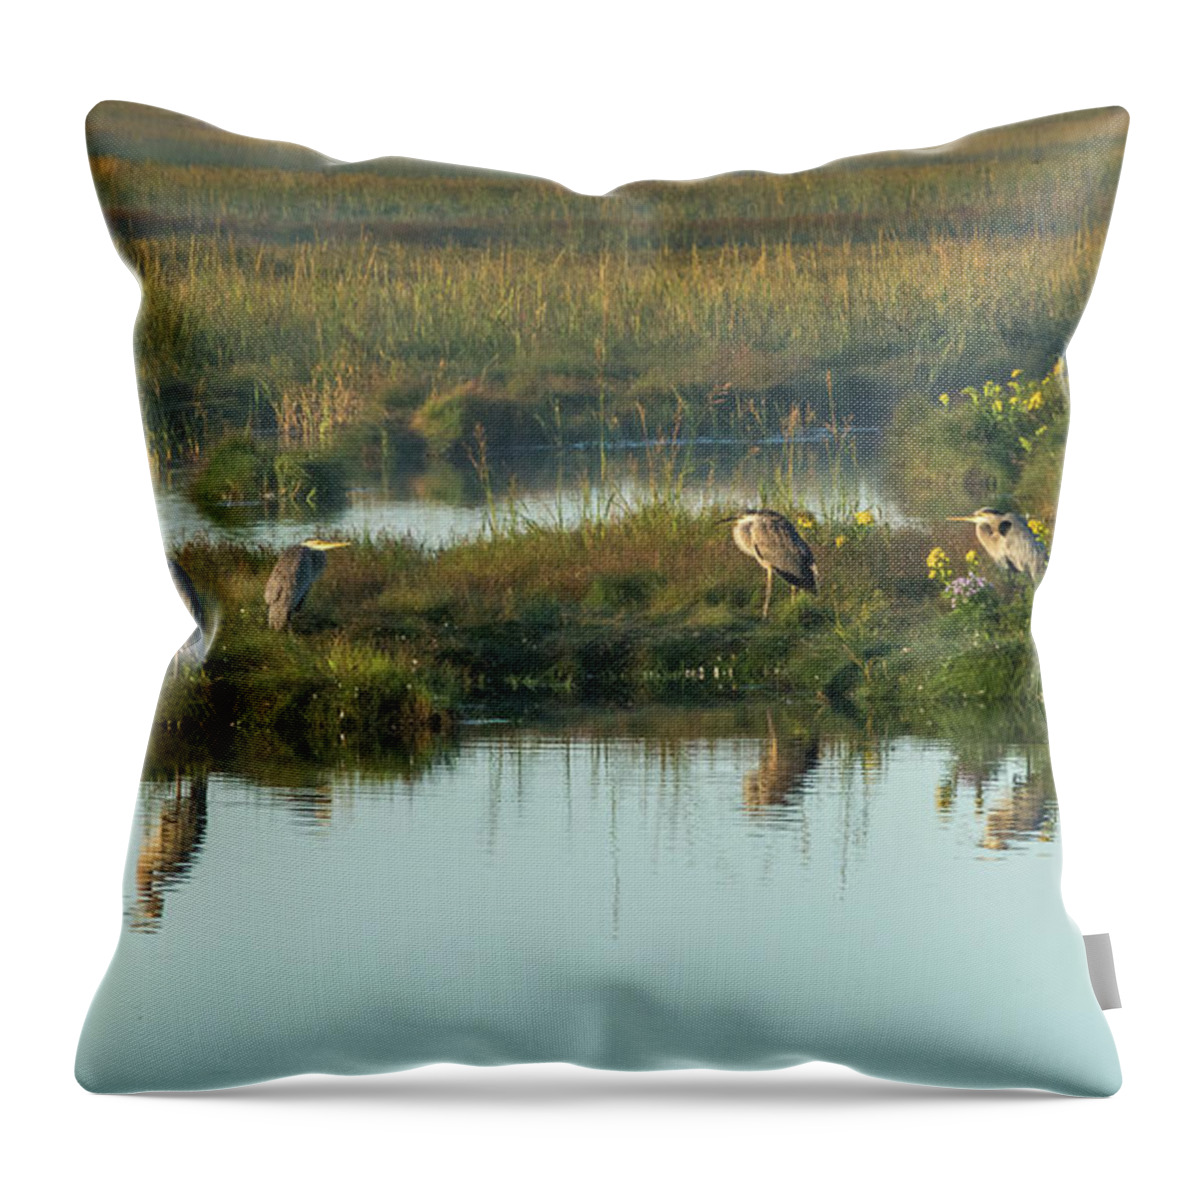 Blue Throw Pillow featuring the photograph Morning Herons by Douglas Wielfaert